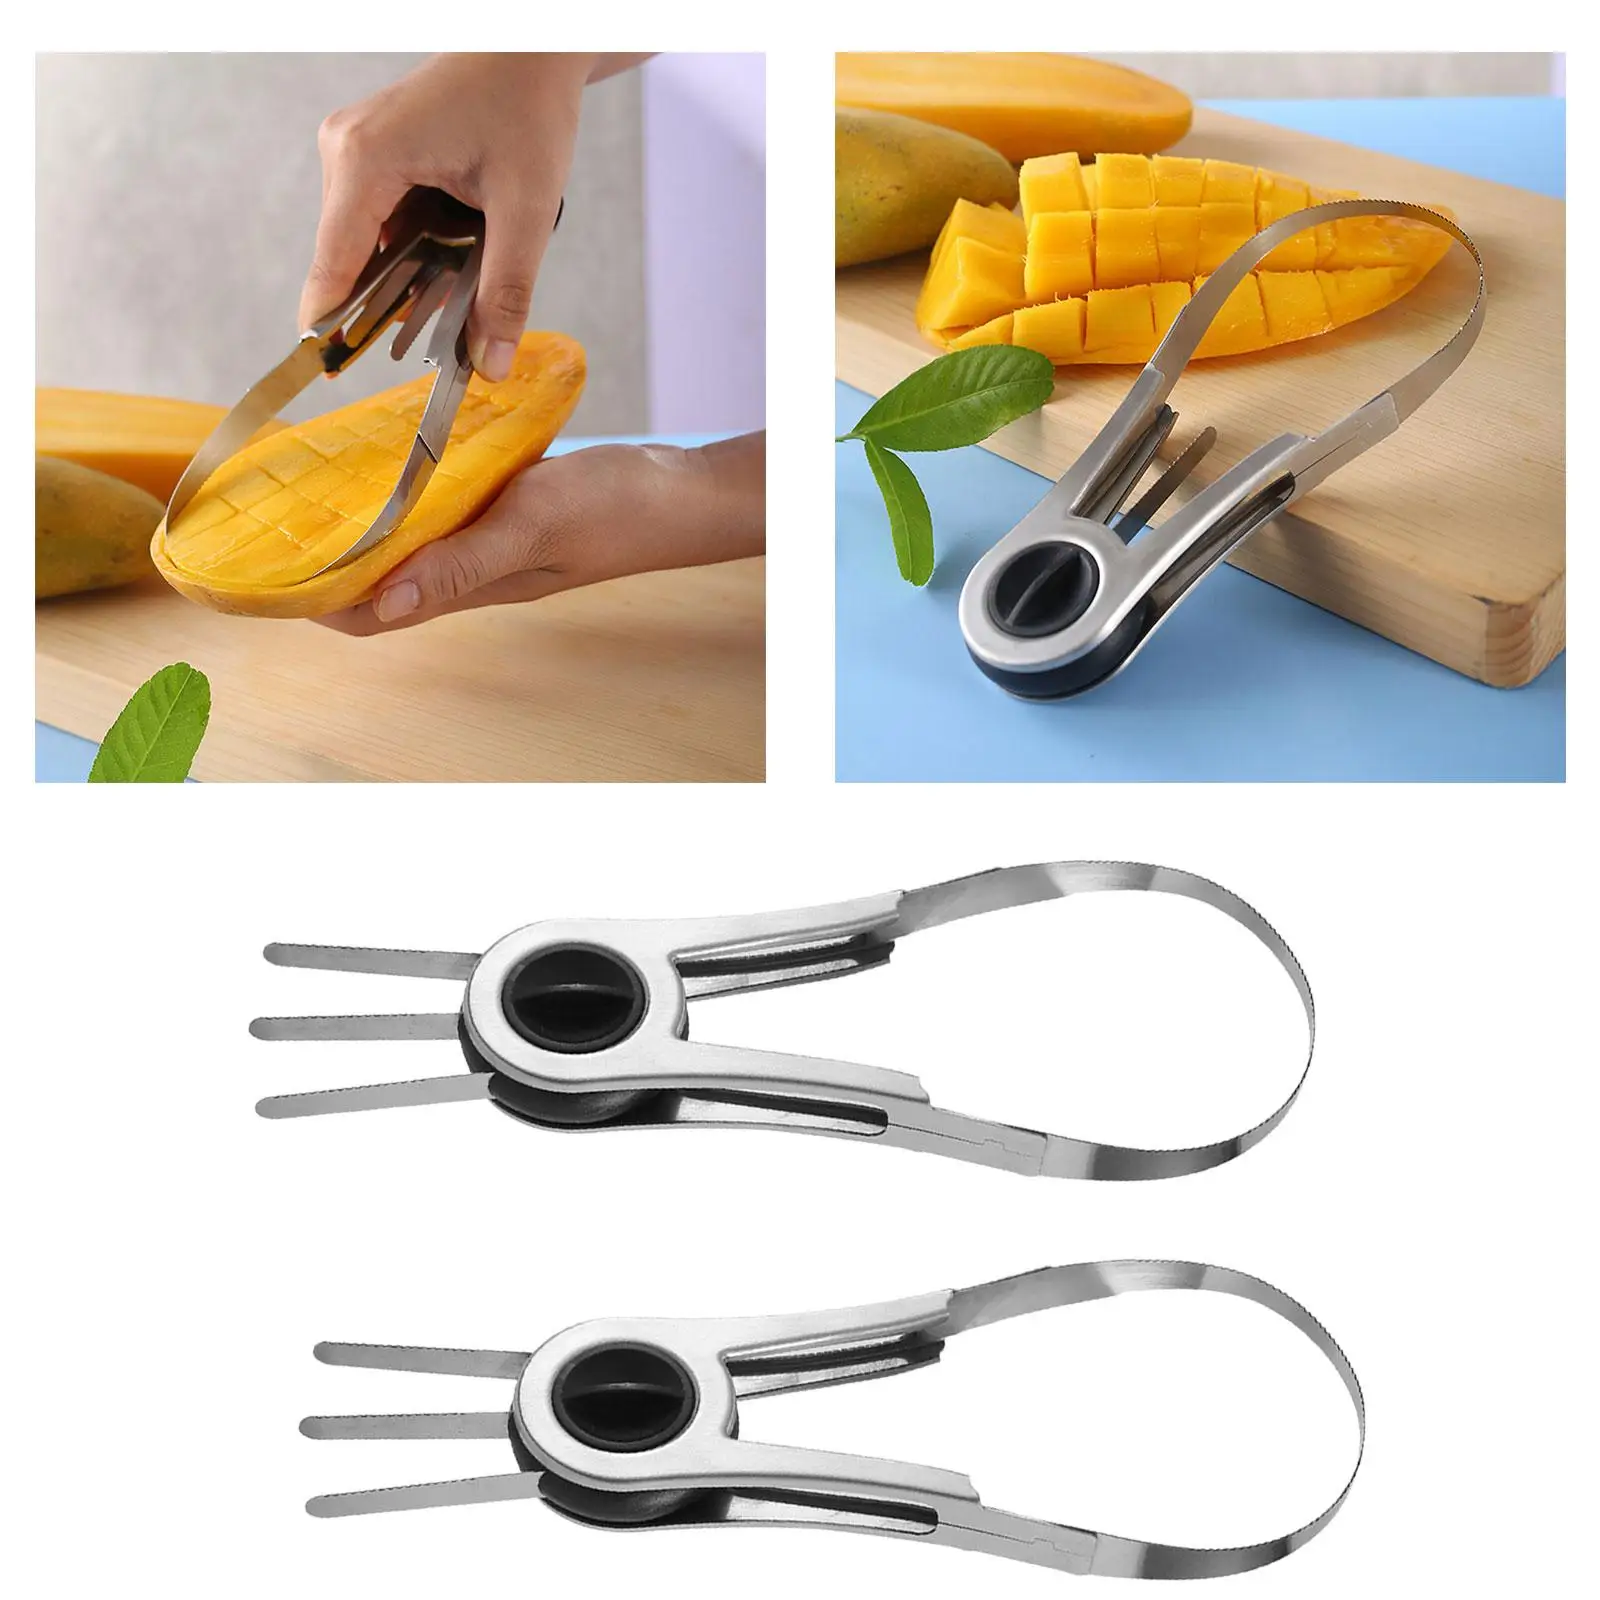 Fruit Core Remover Tool Household Reusabe Durable Mango Divider Fruit Splitter Corer for Mango Papaya Pitaya